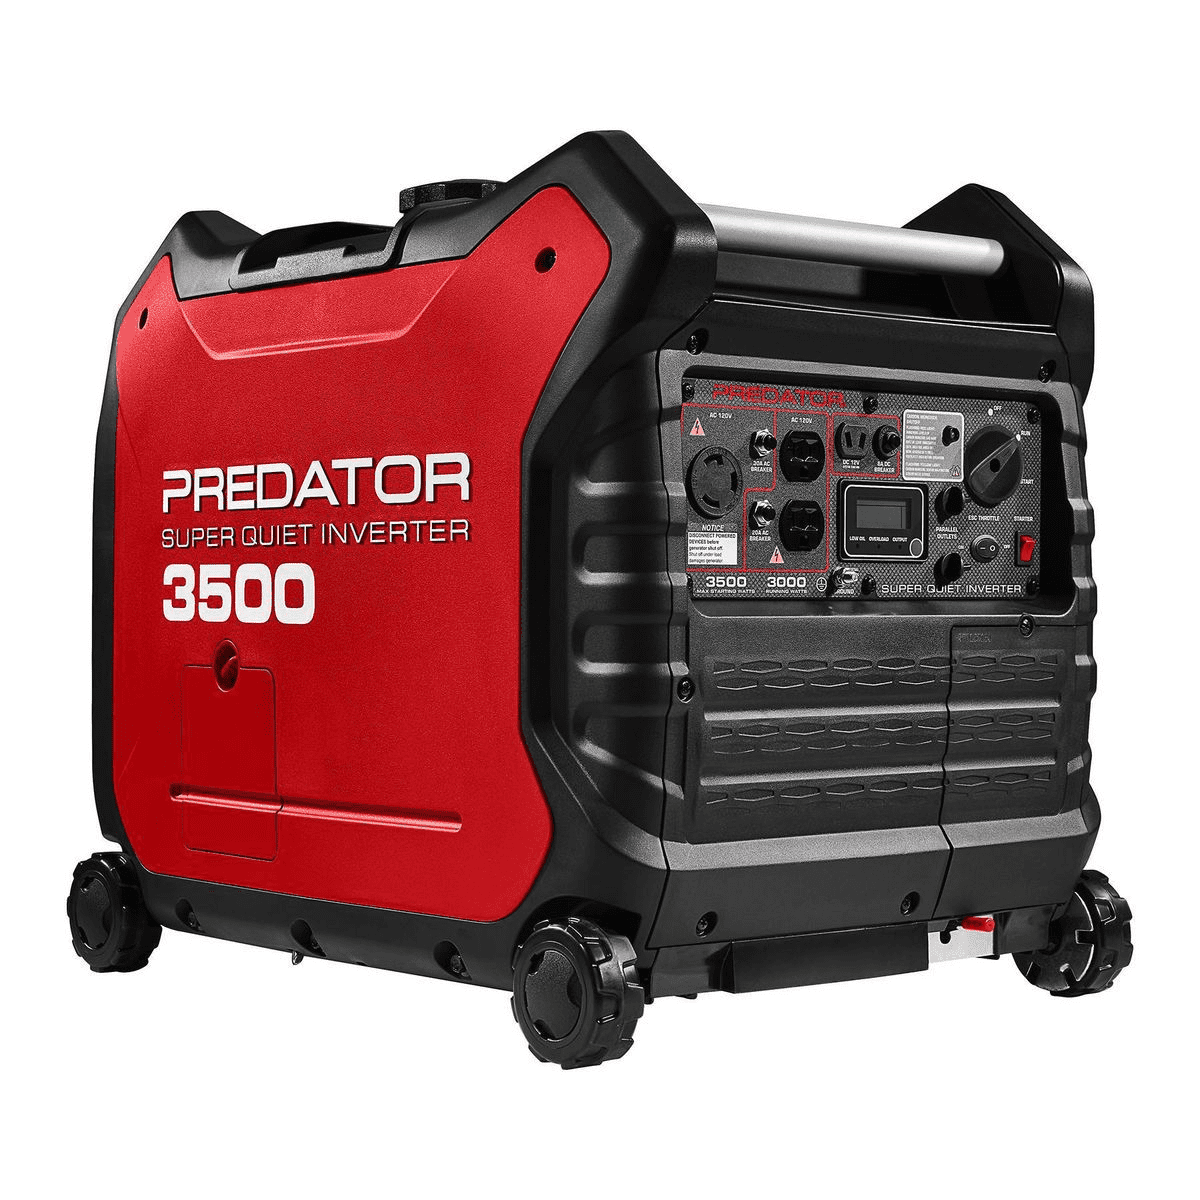 Predator Generator Electric Start Not Working